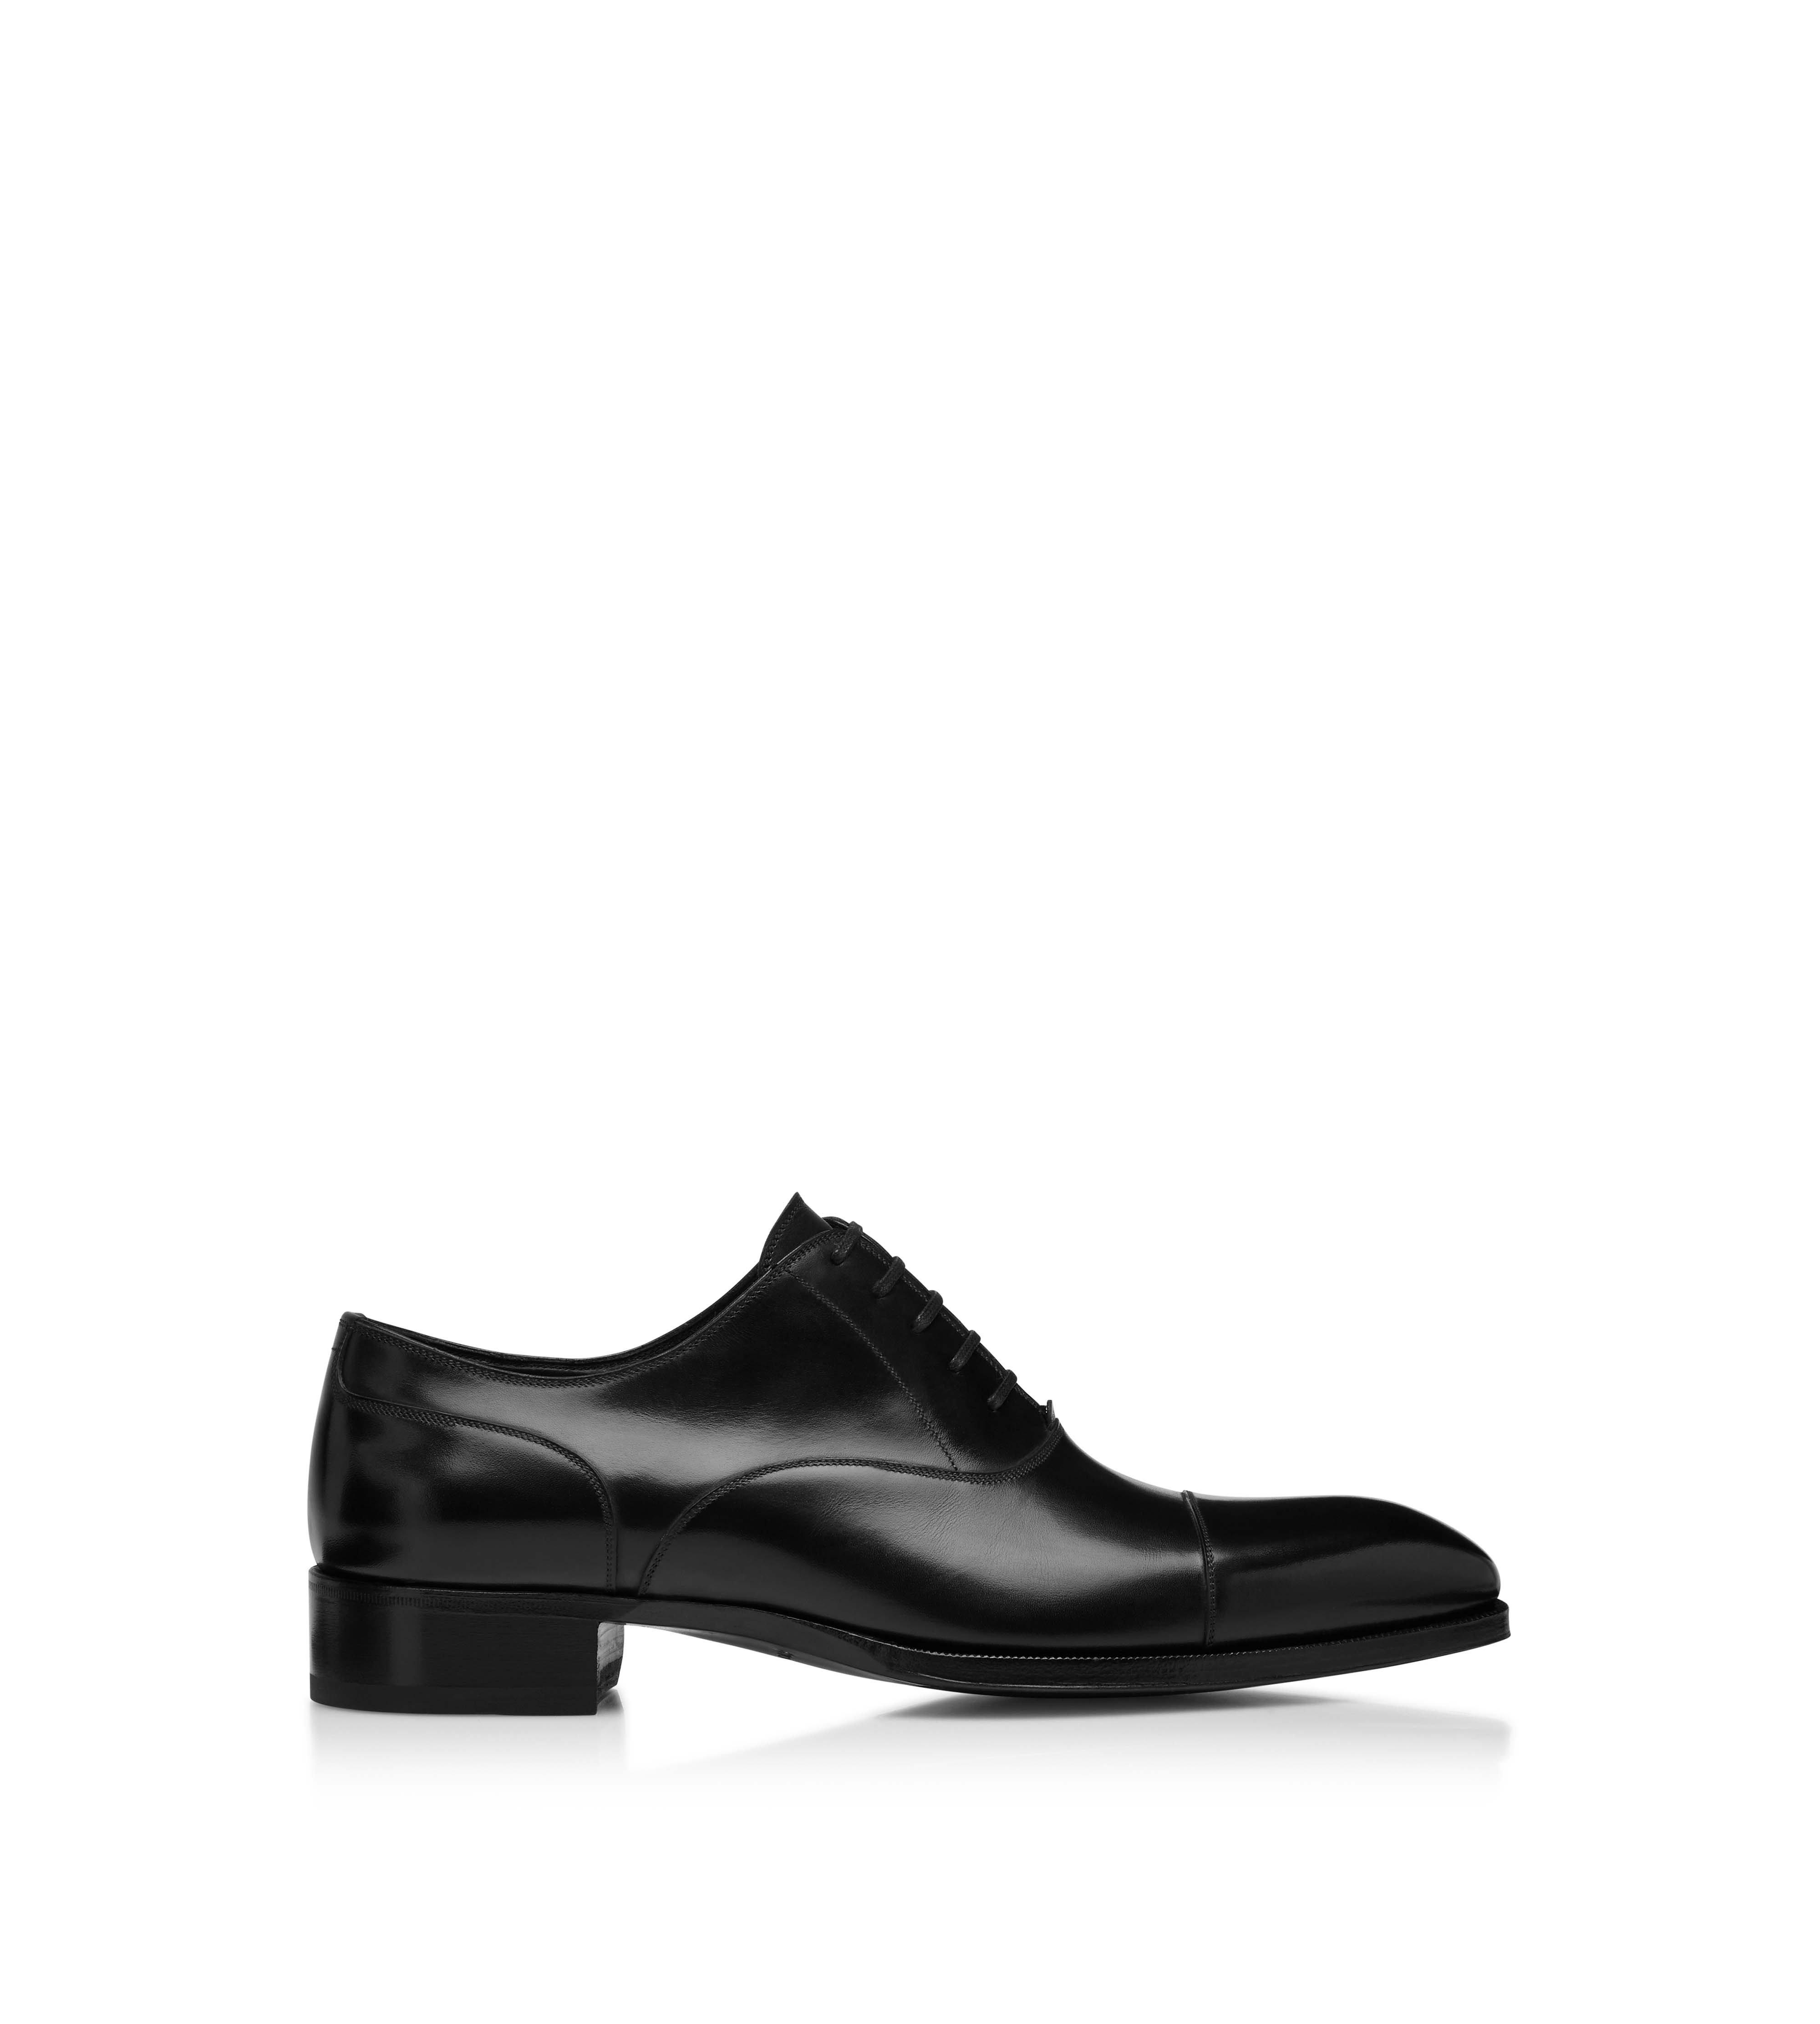 Men's Shoes | TomFord.com